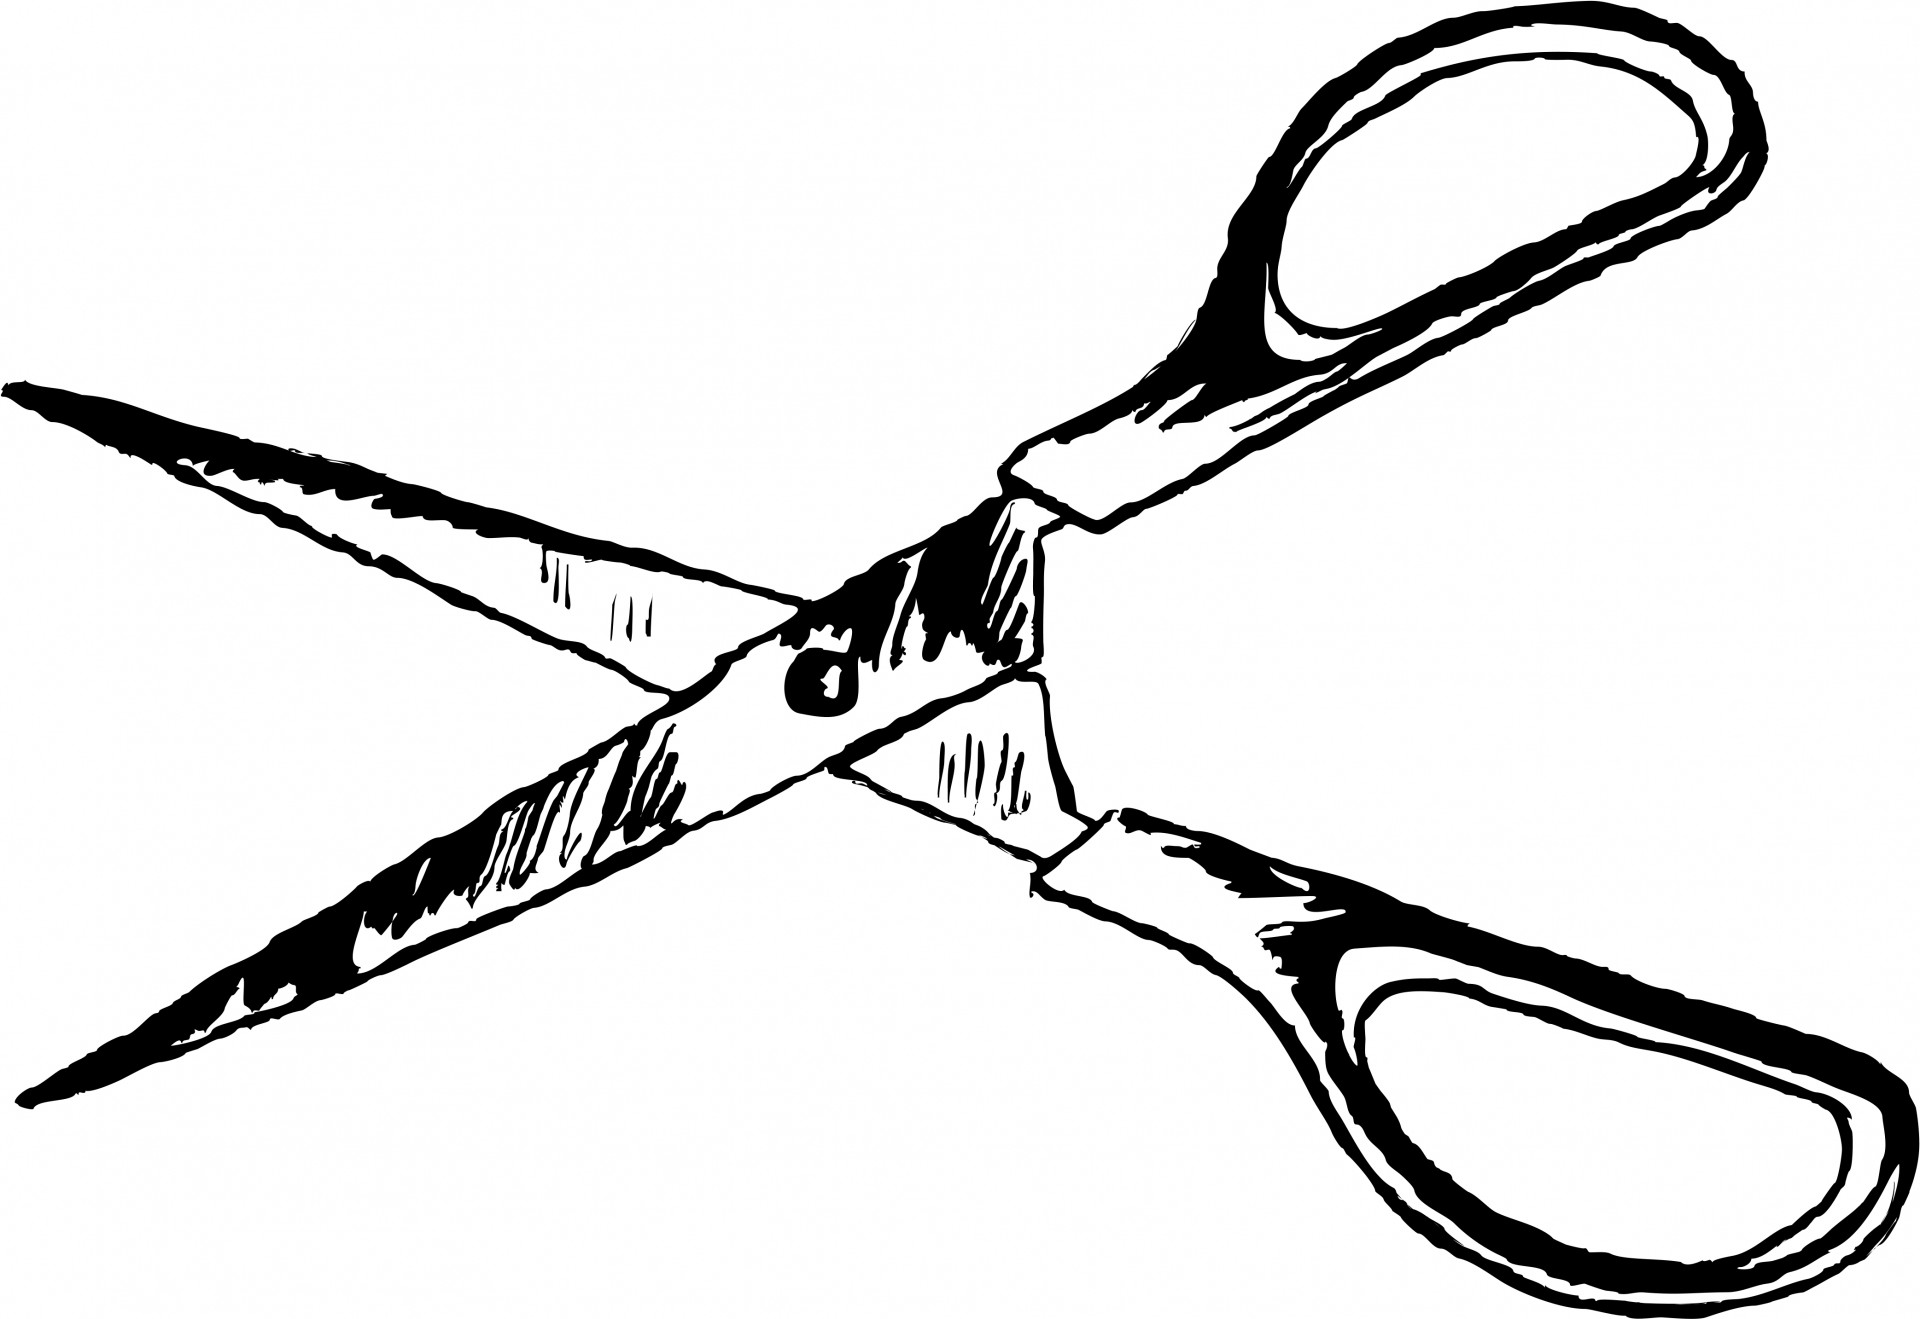 Clipart scissors. Free stock photo public